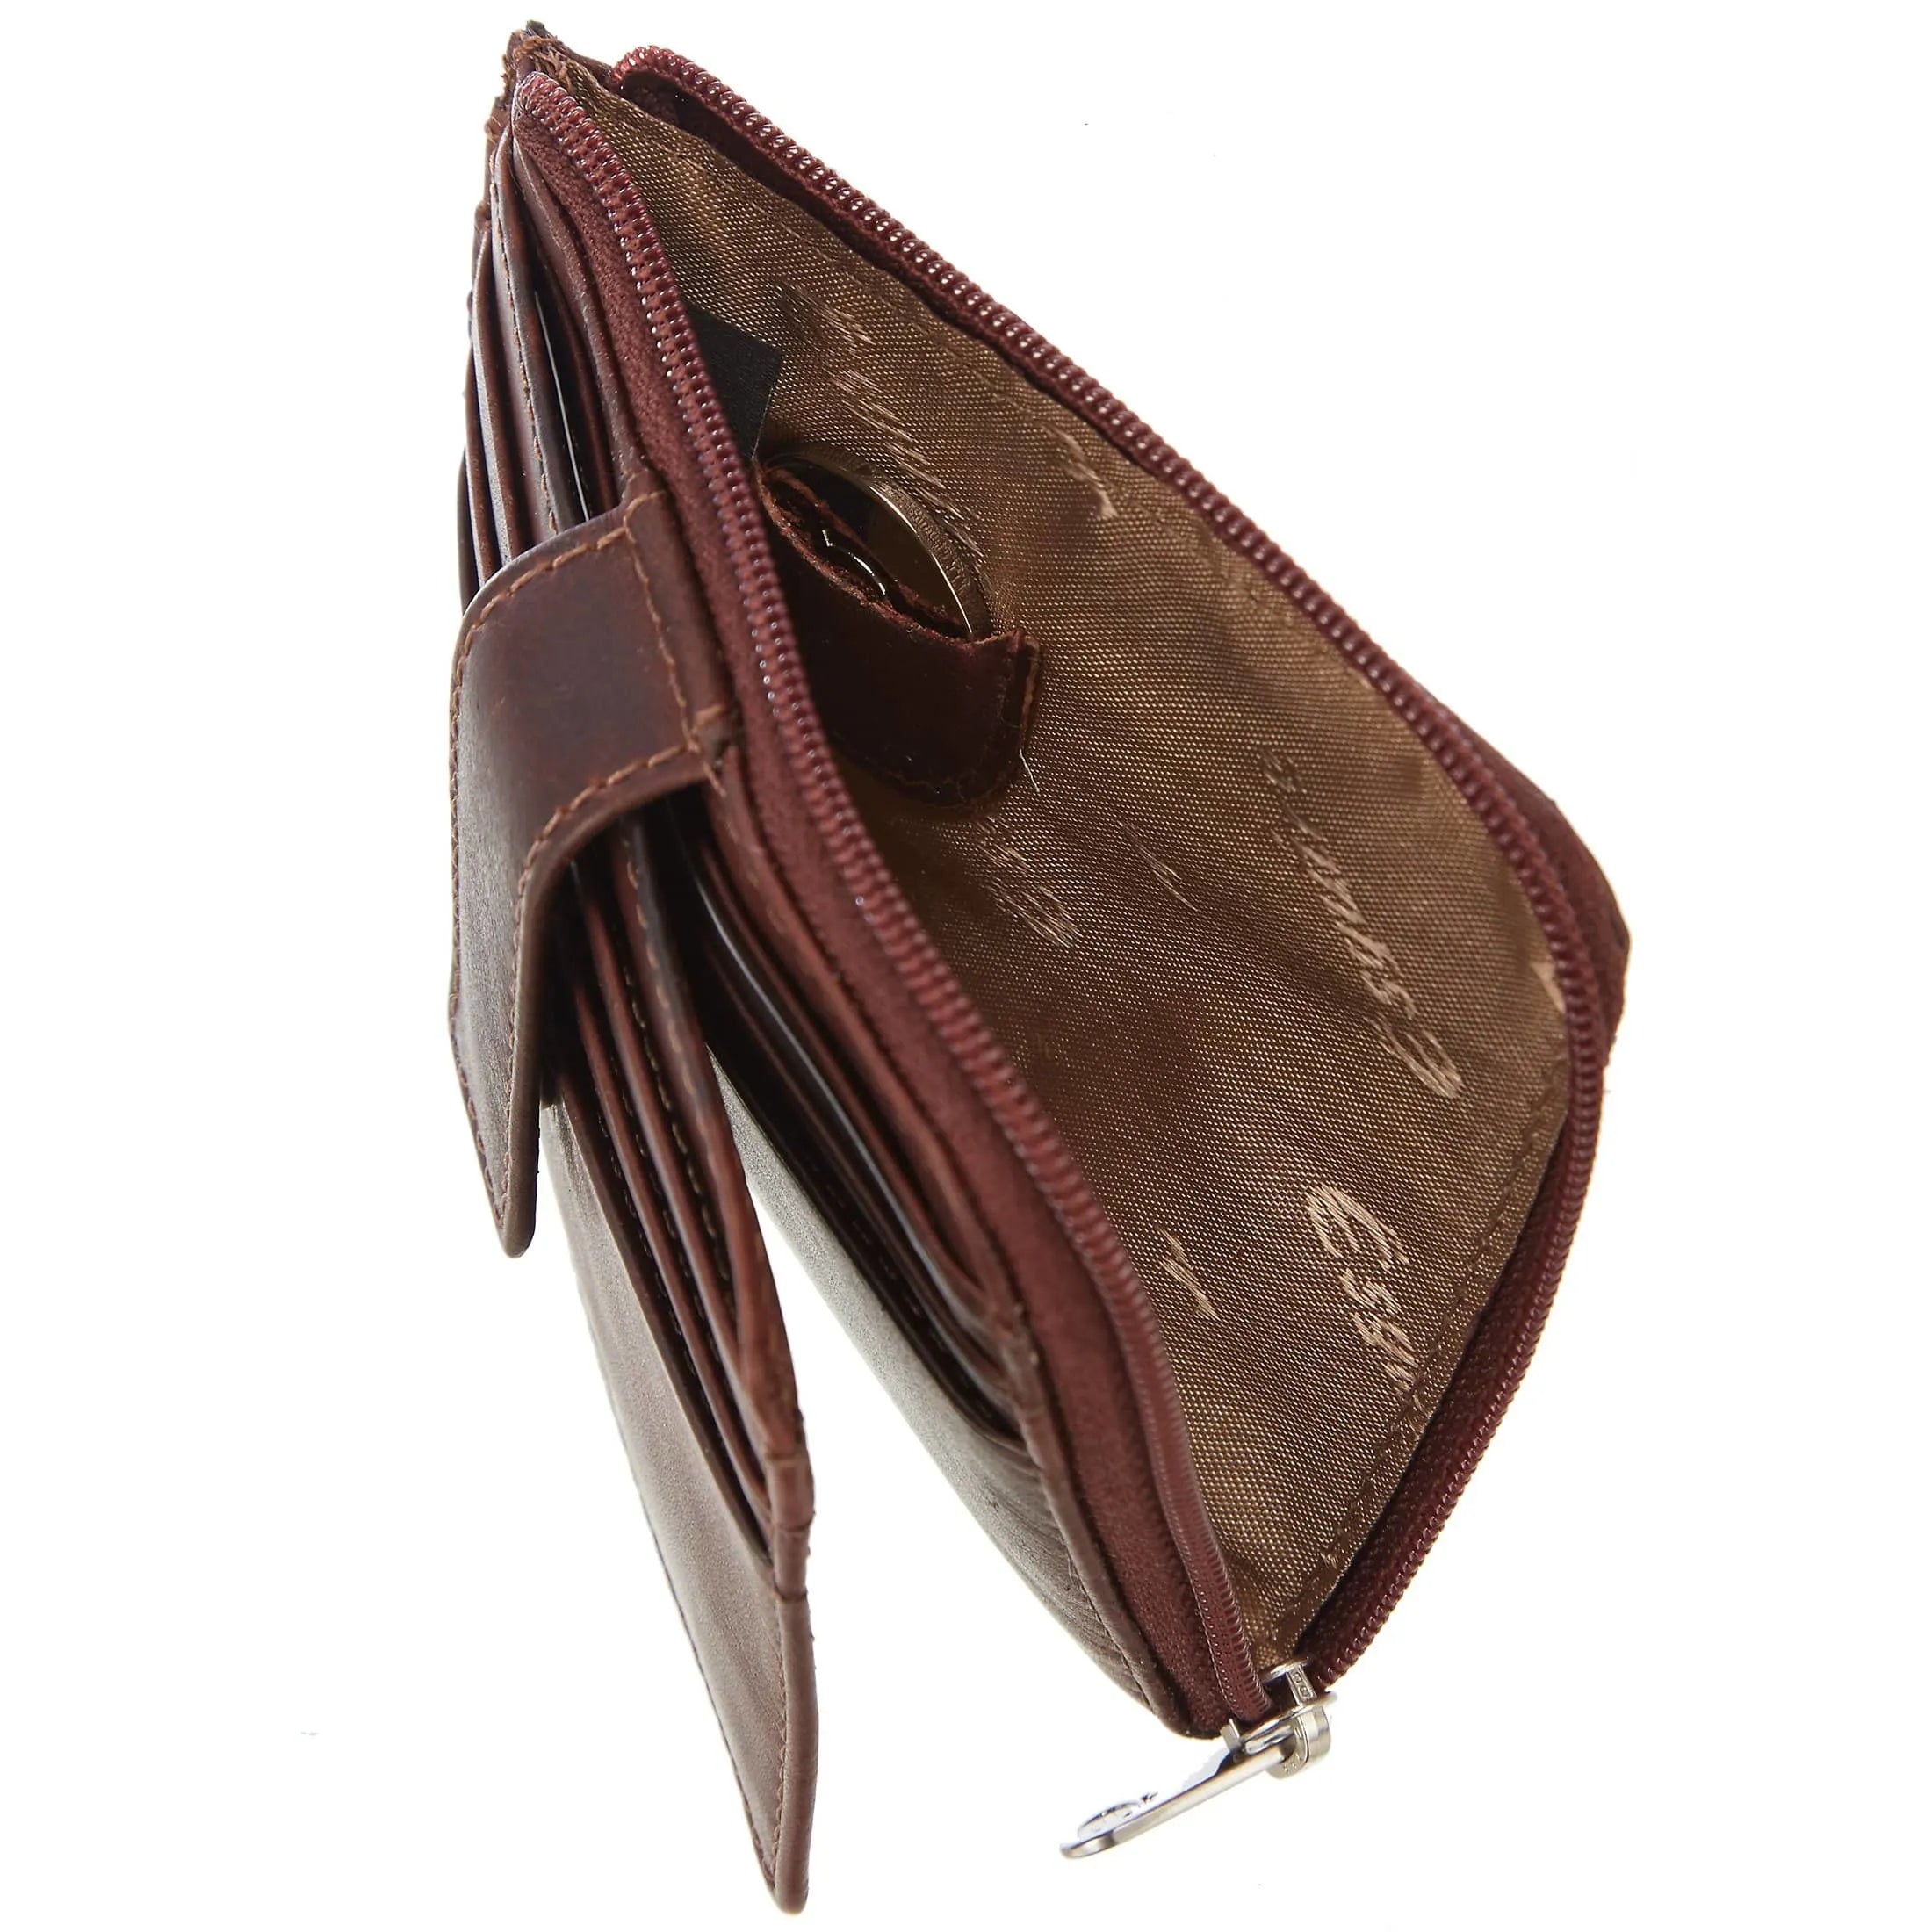 Esquire Oslo Dallas credit card holder RFID 11 cm - brown